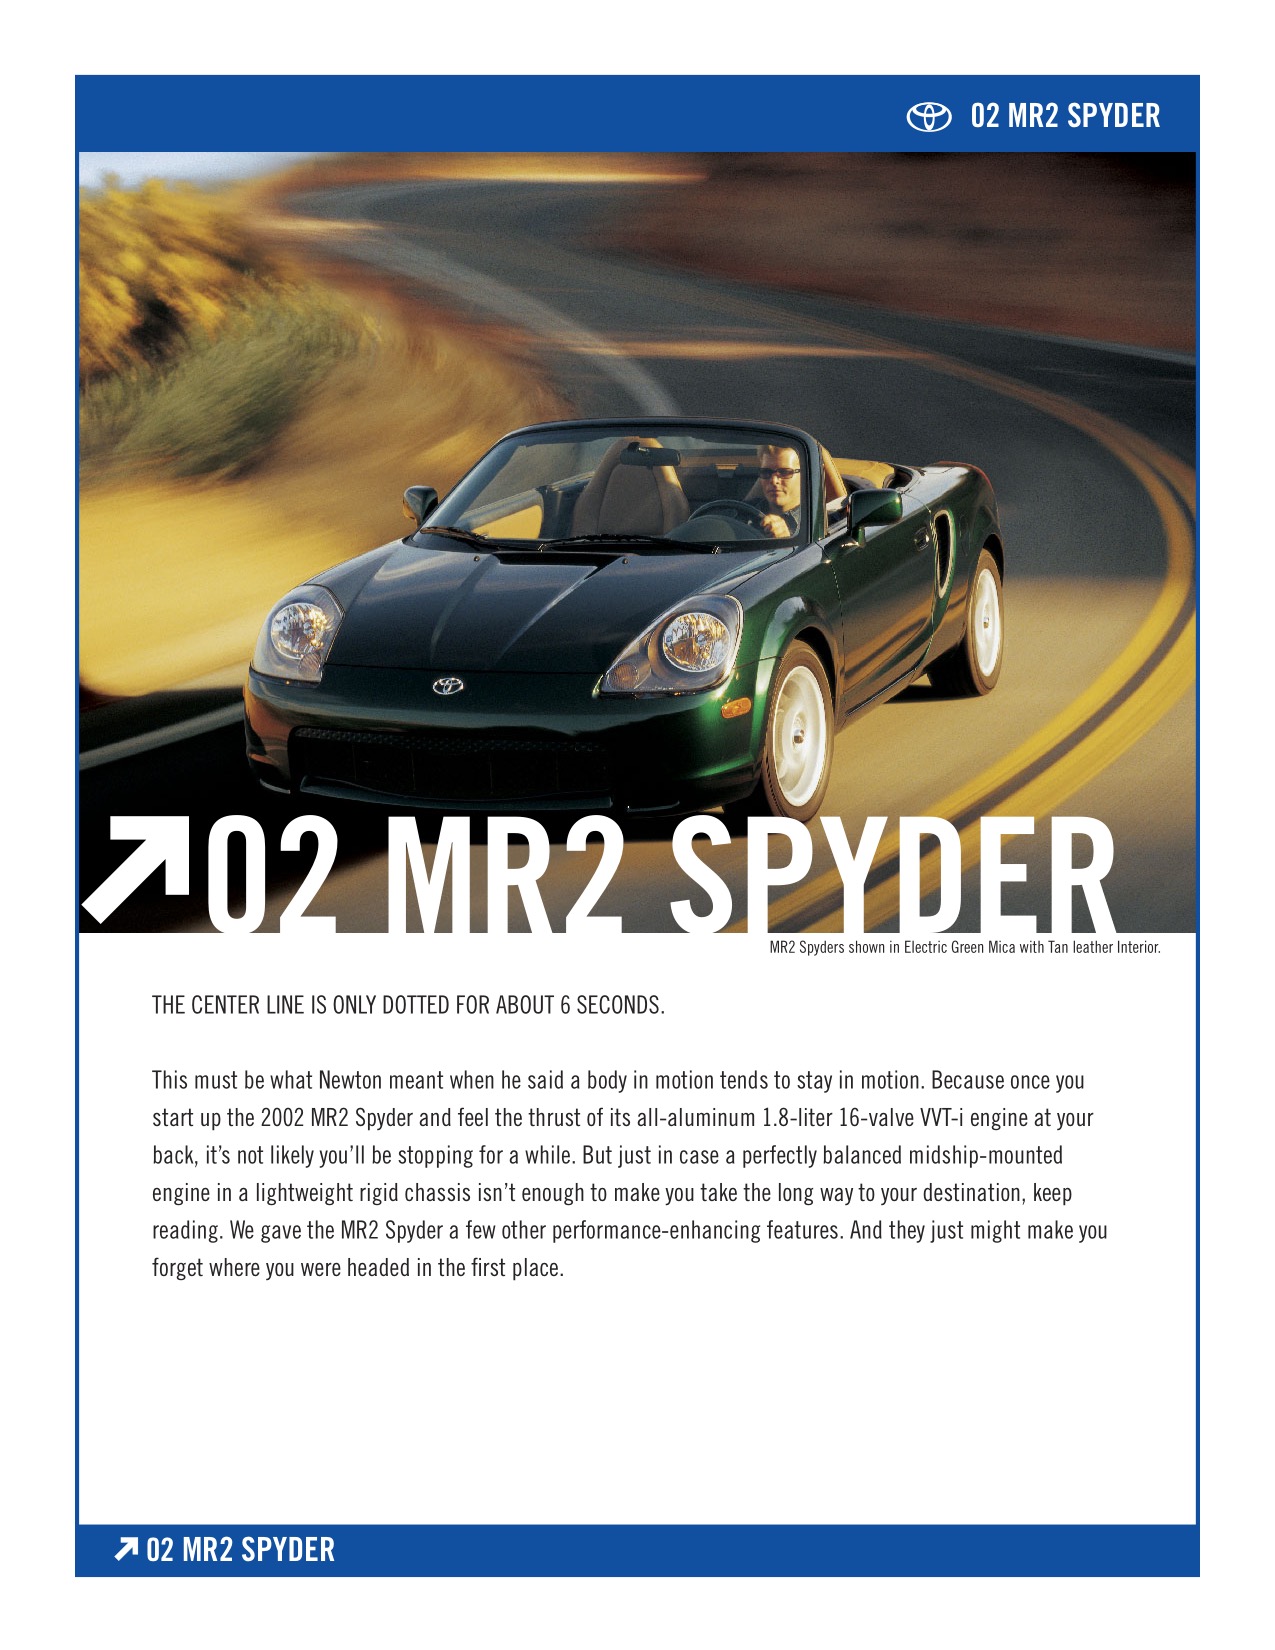 2002 Toyota MR2 Brochure